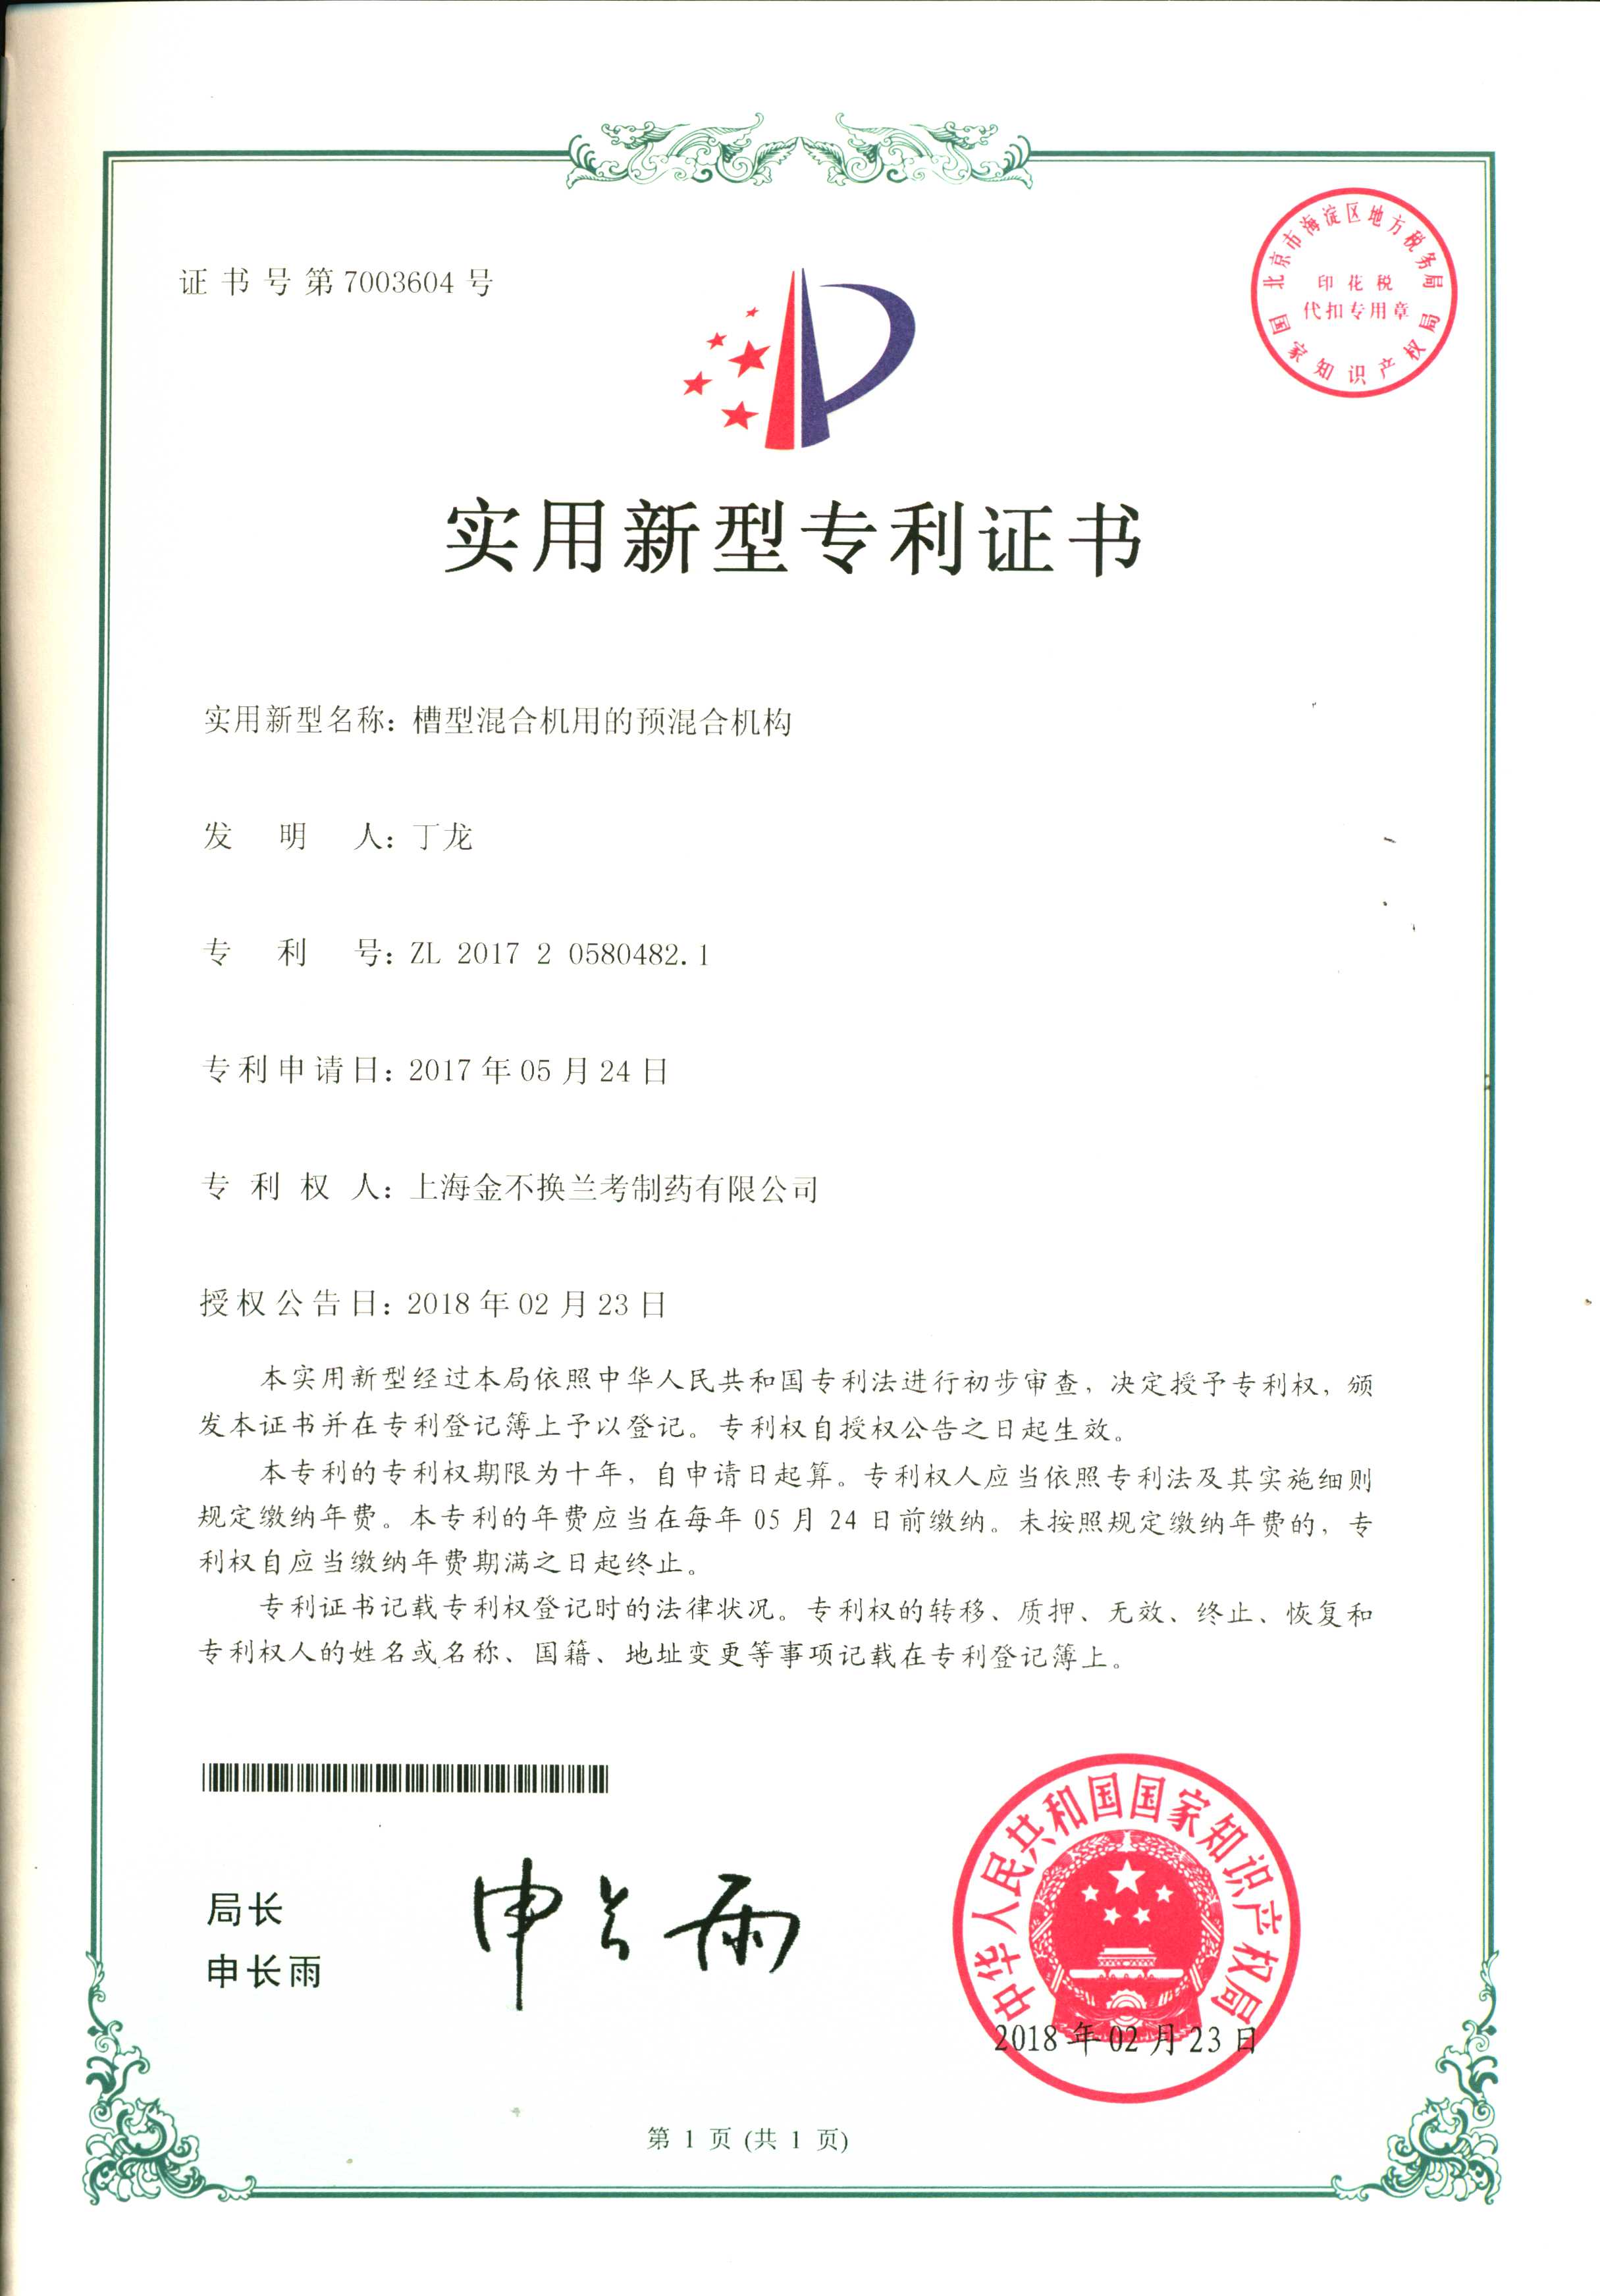 Patent Certificate 2